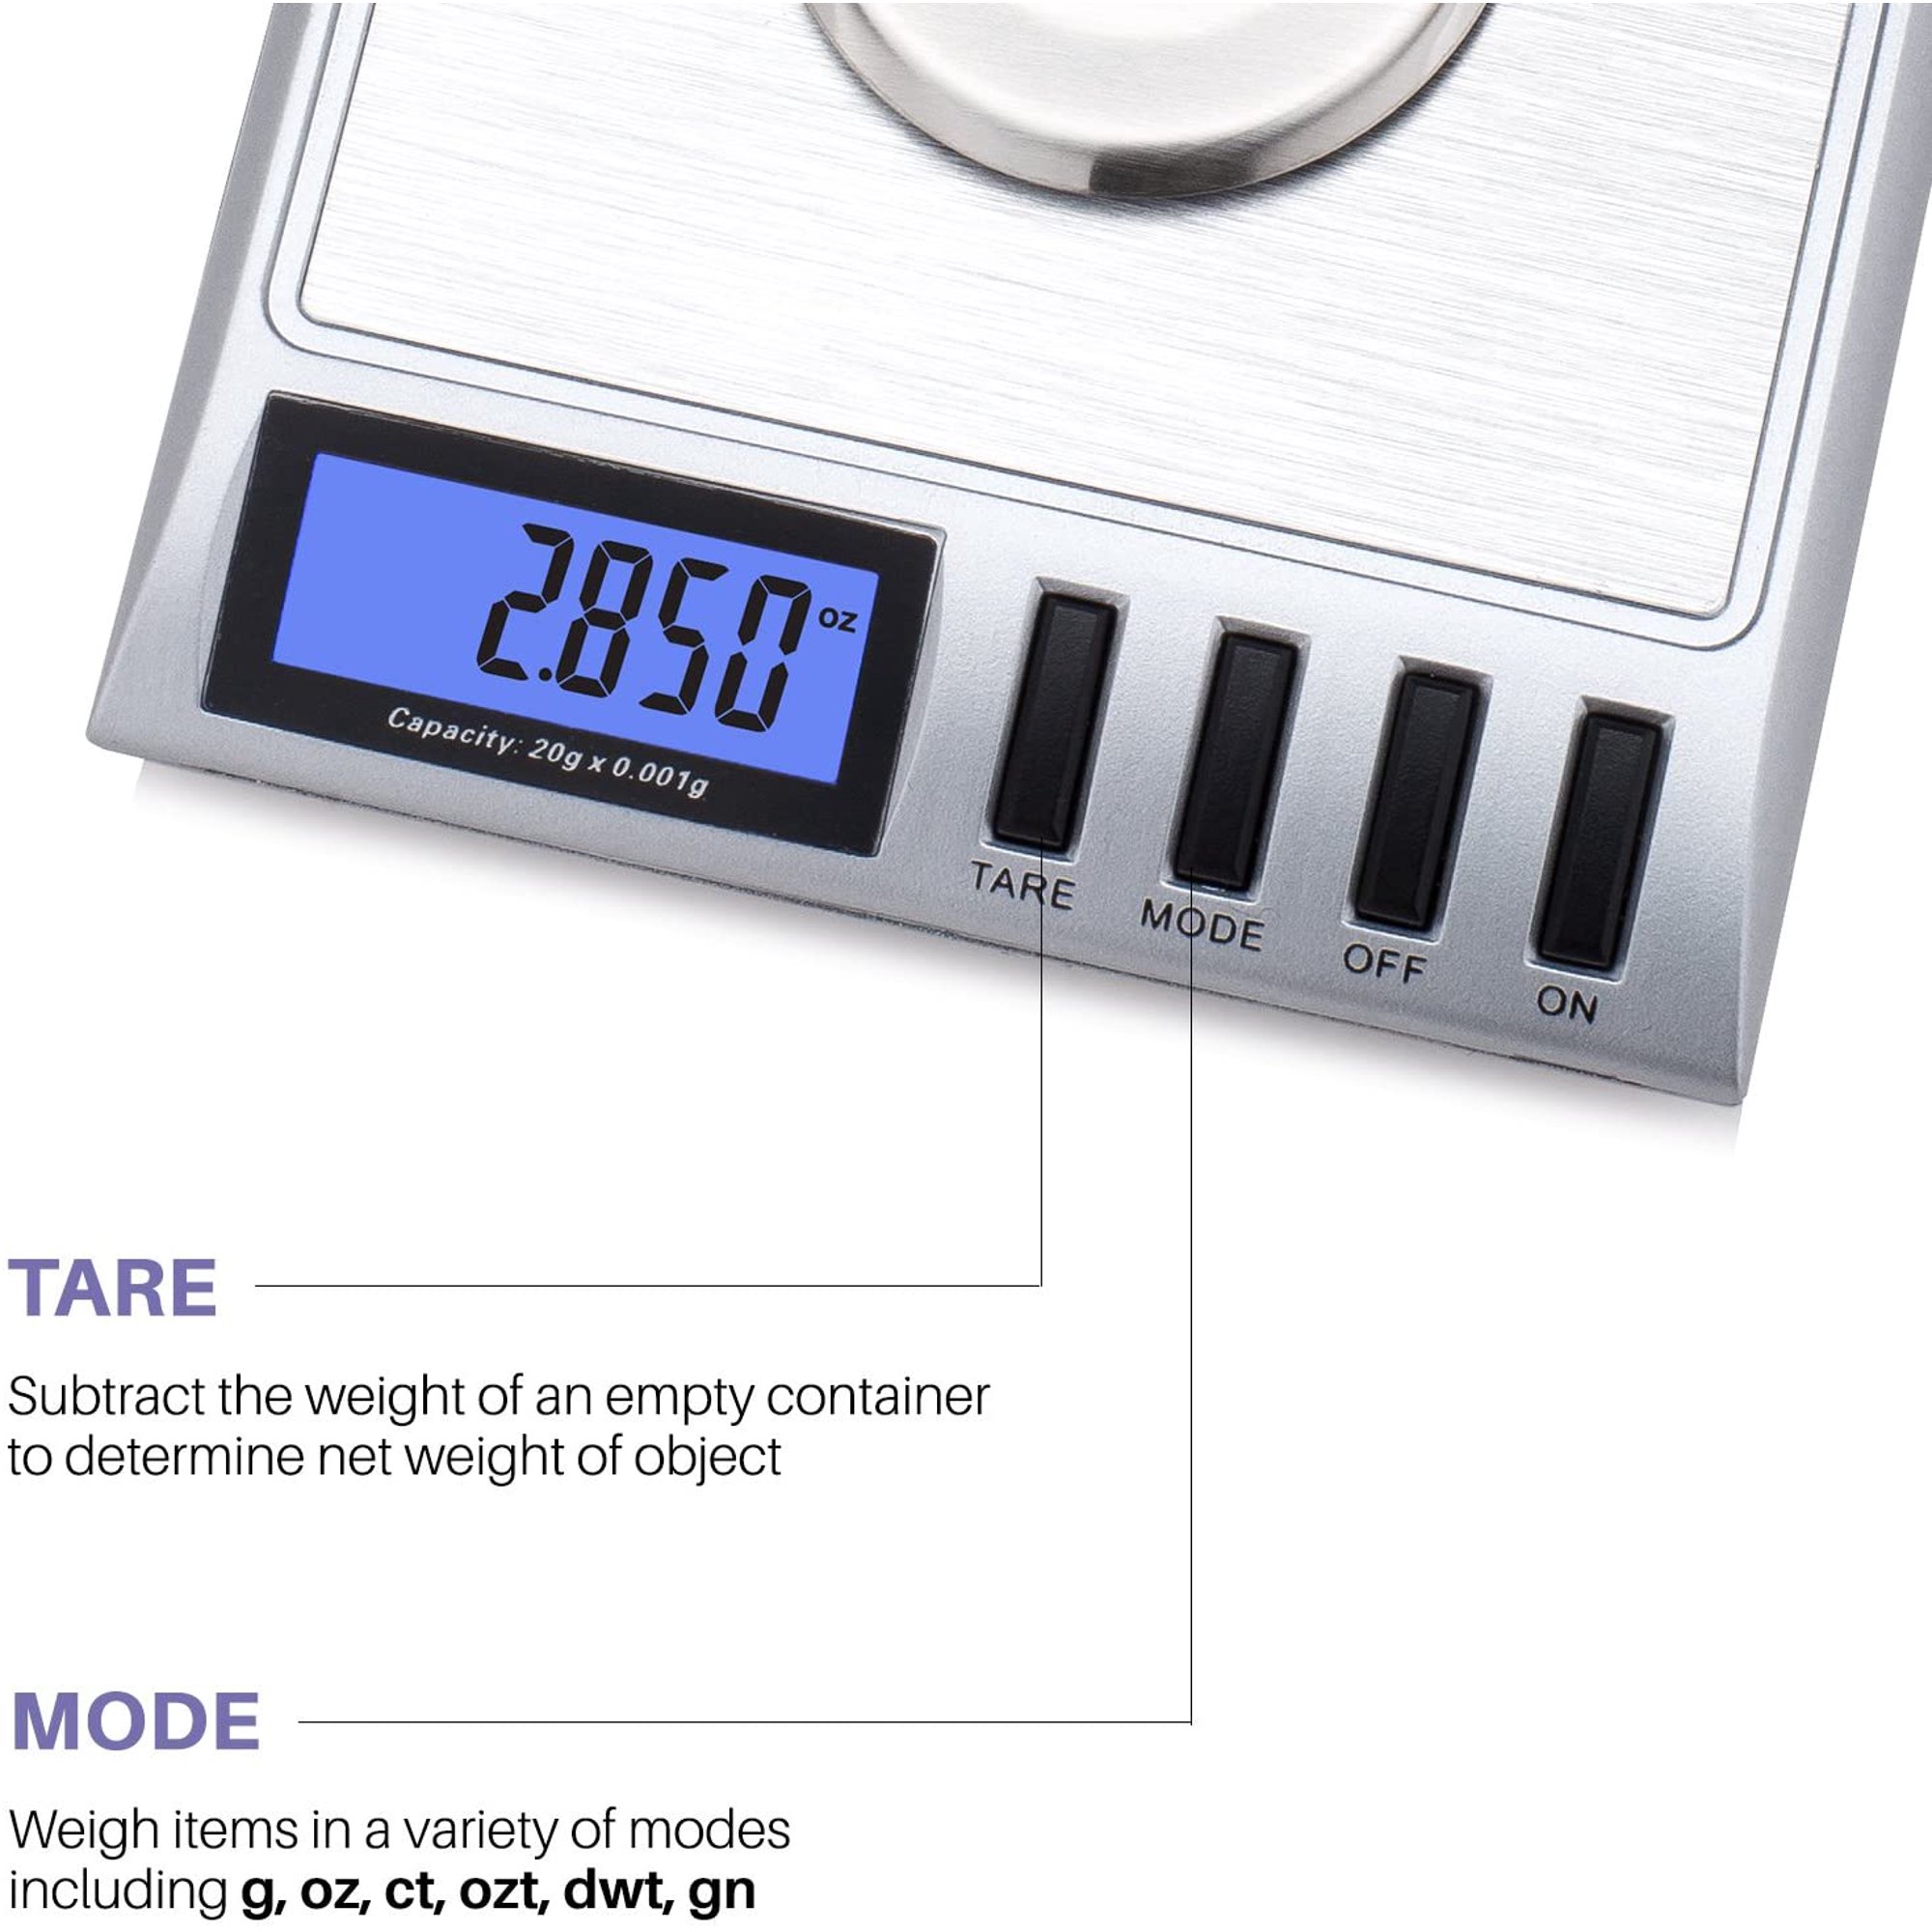 GEMINI-20 Precision Milligram Scale - American Weigh Scales